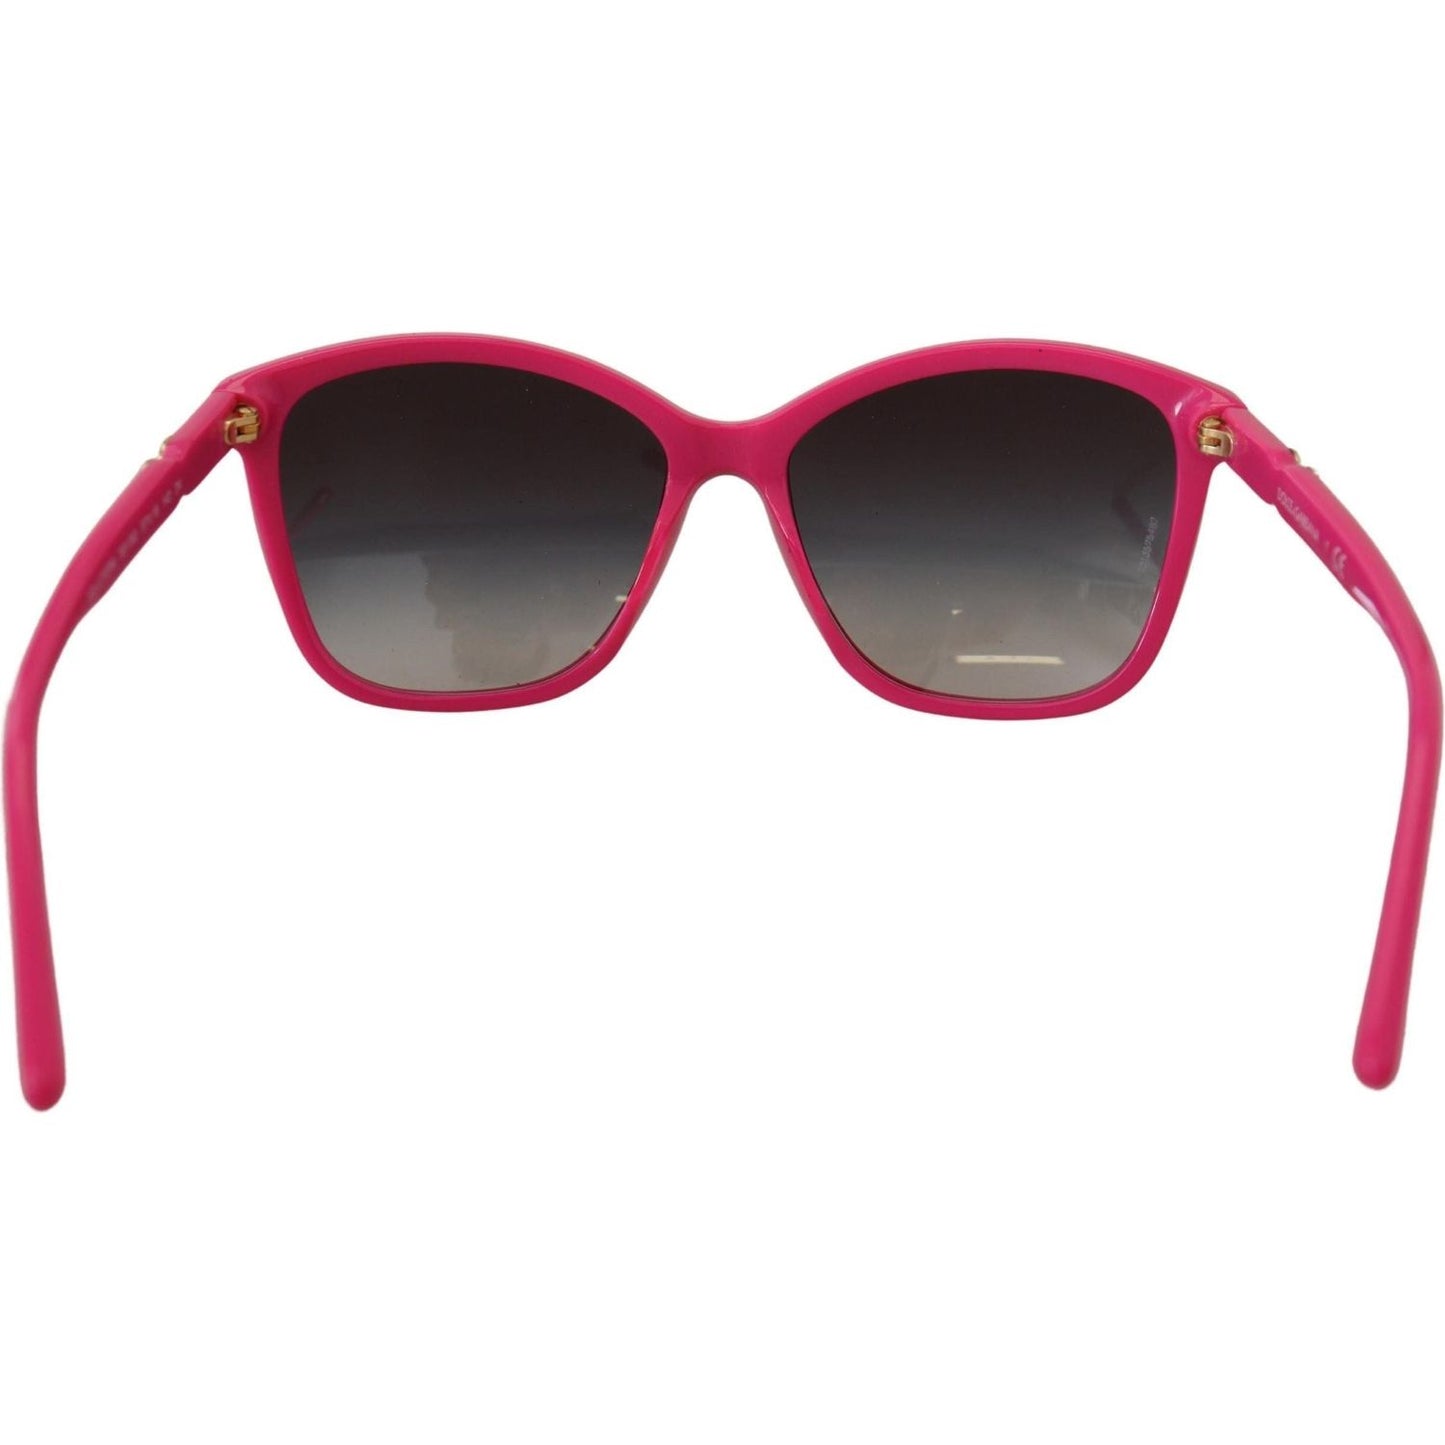 Dolce & Gabbana Elegant Pink Round Sunglasses for Women pink-acetate-frame-round-shades-dg4170m-women-sunglasses